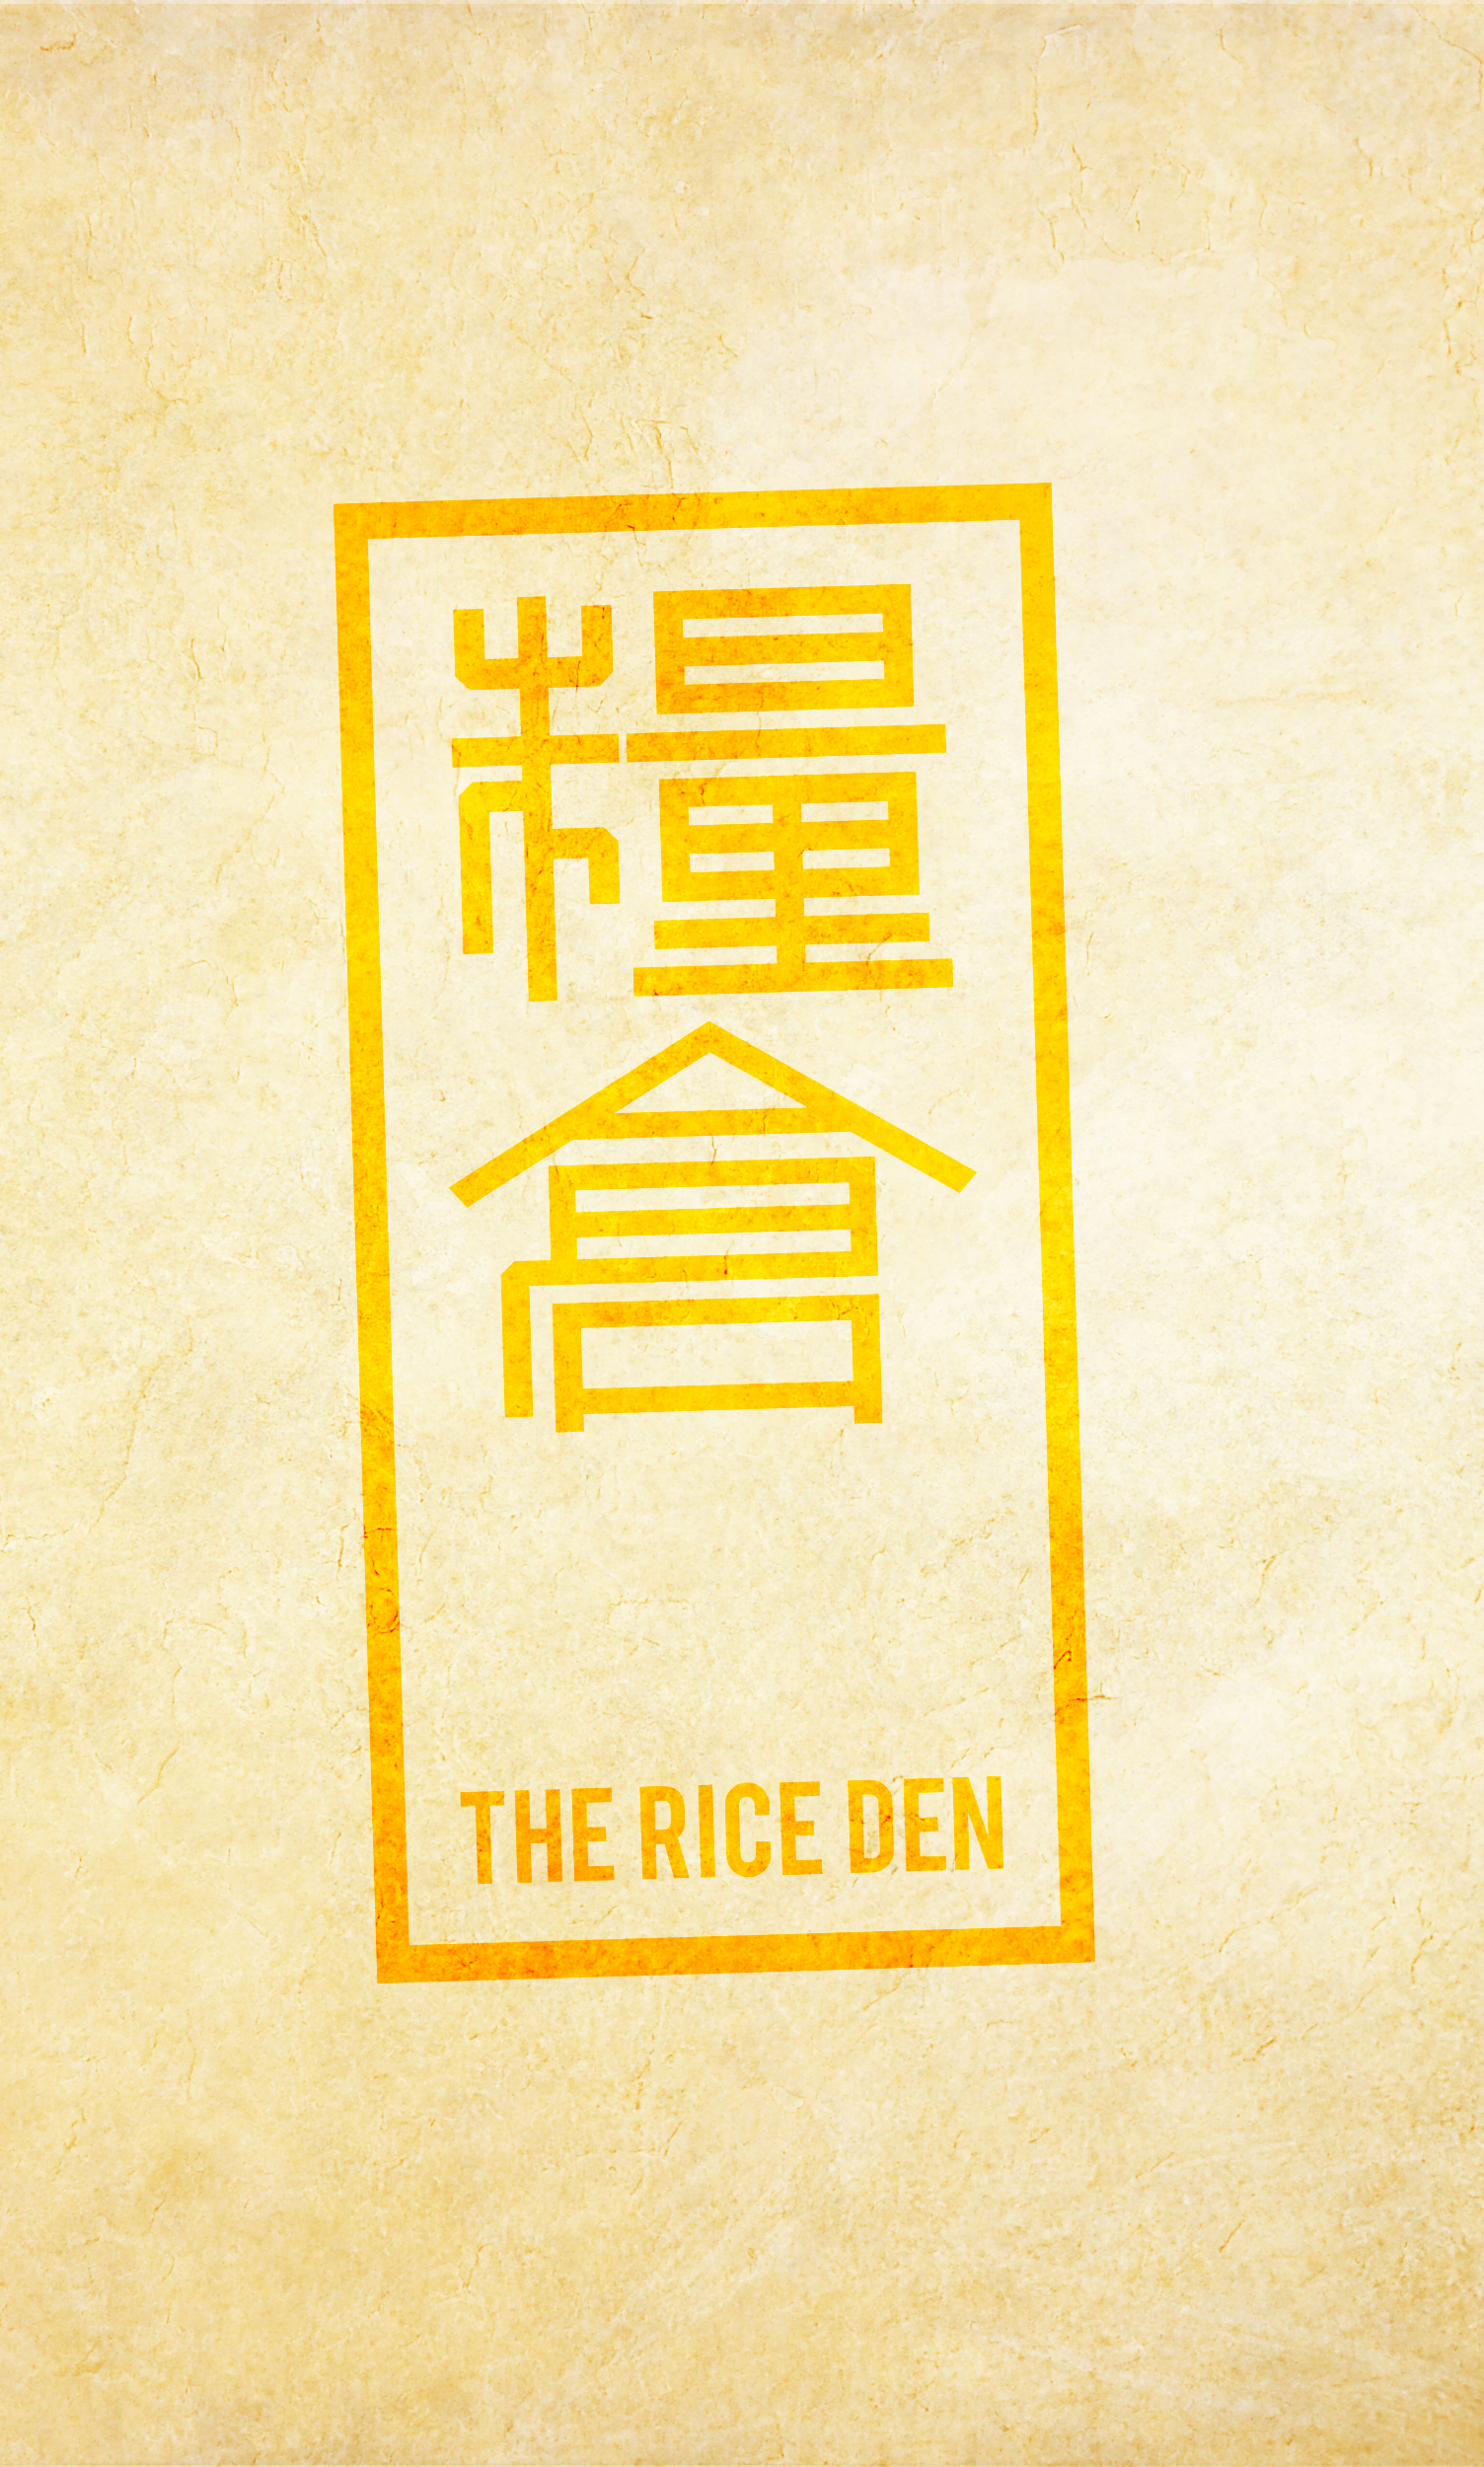 The Rice Den